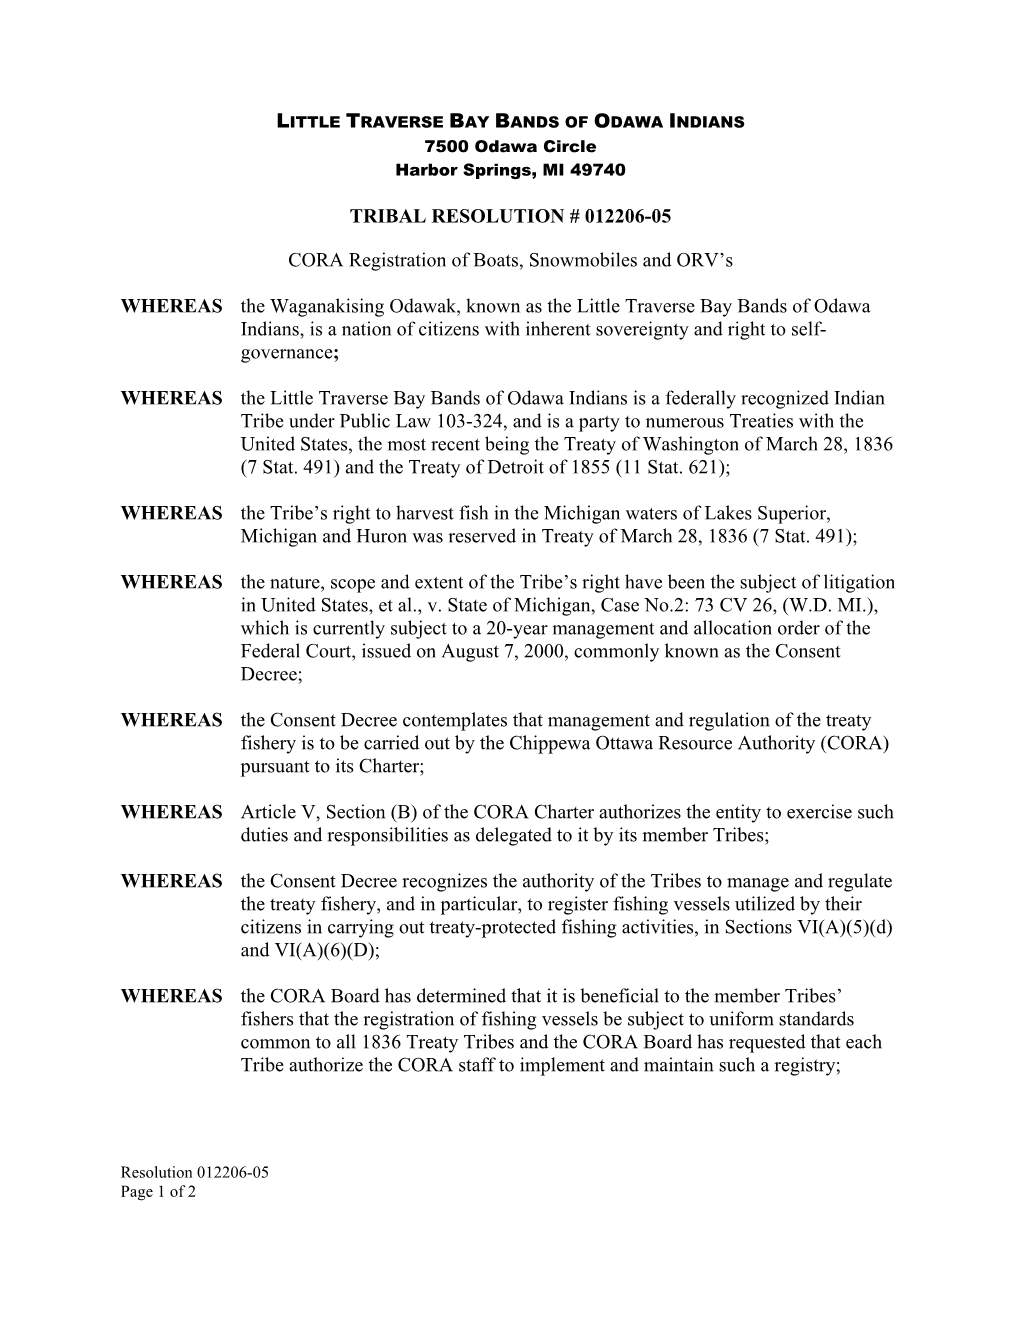 Tribal Resolution # 012206-05